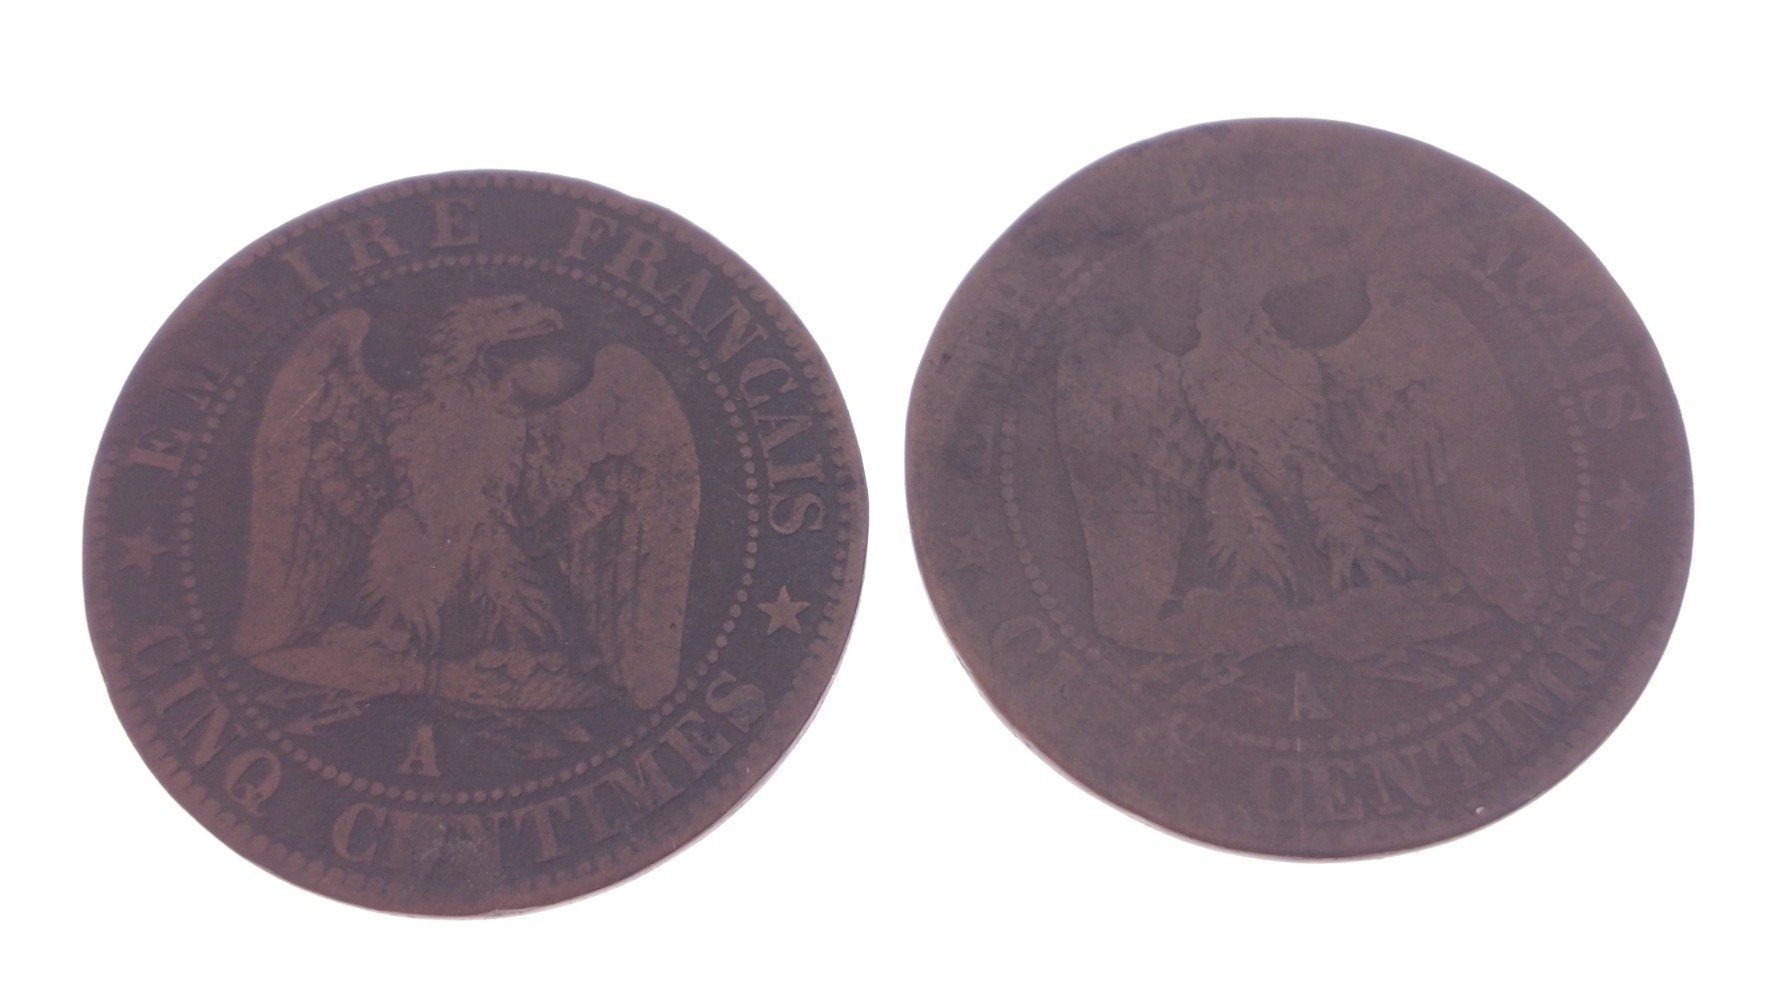 Two 1855 5 Centimes Napoleon III (1808-1873), Empereur de France (1852-1870) coins, bronze, - Image 3 of 4